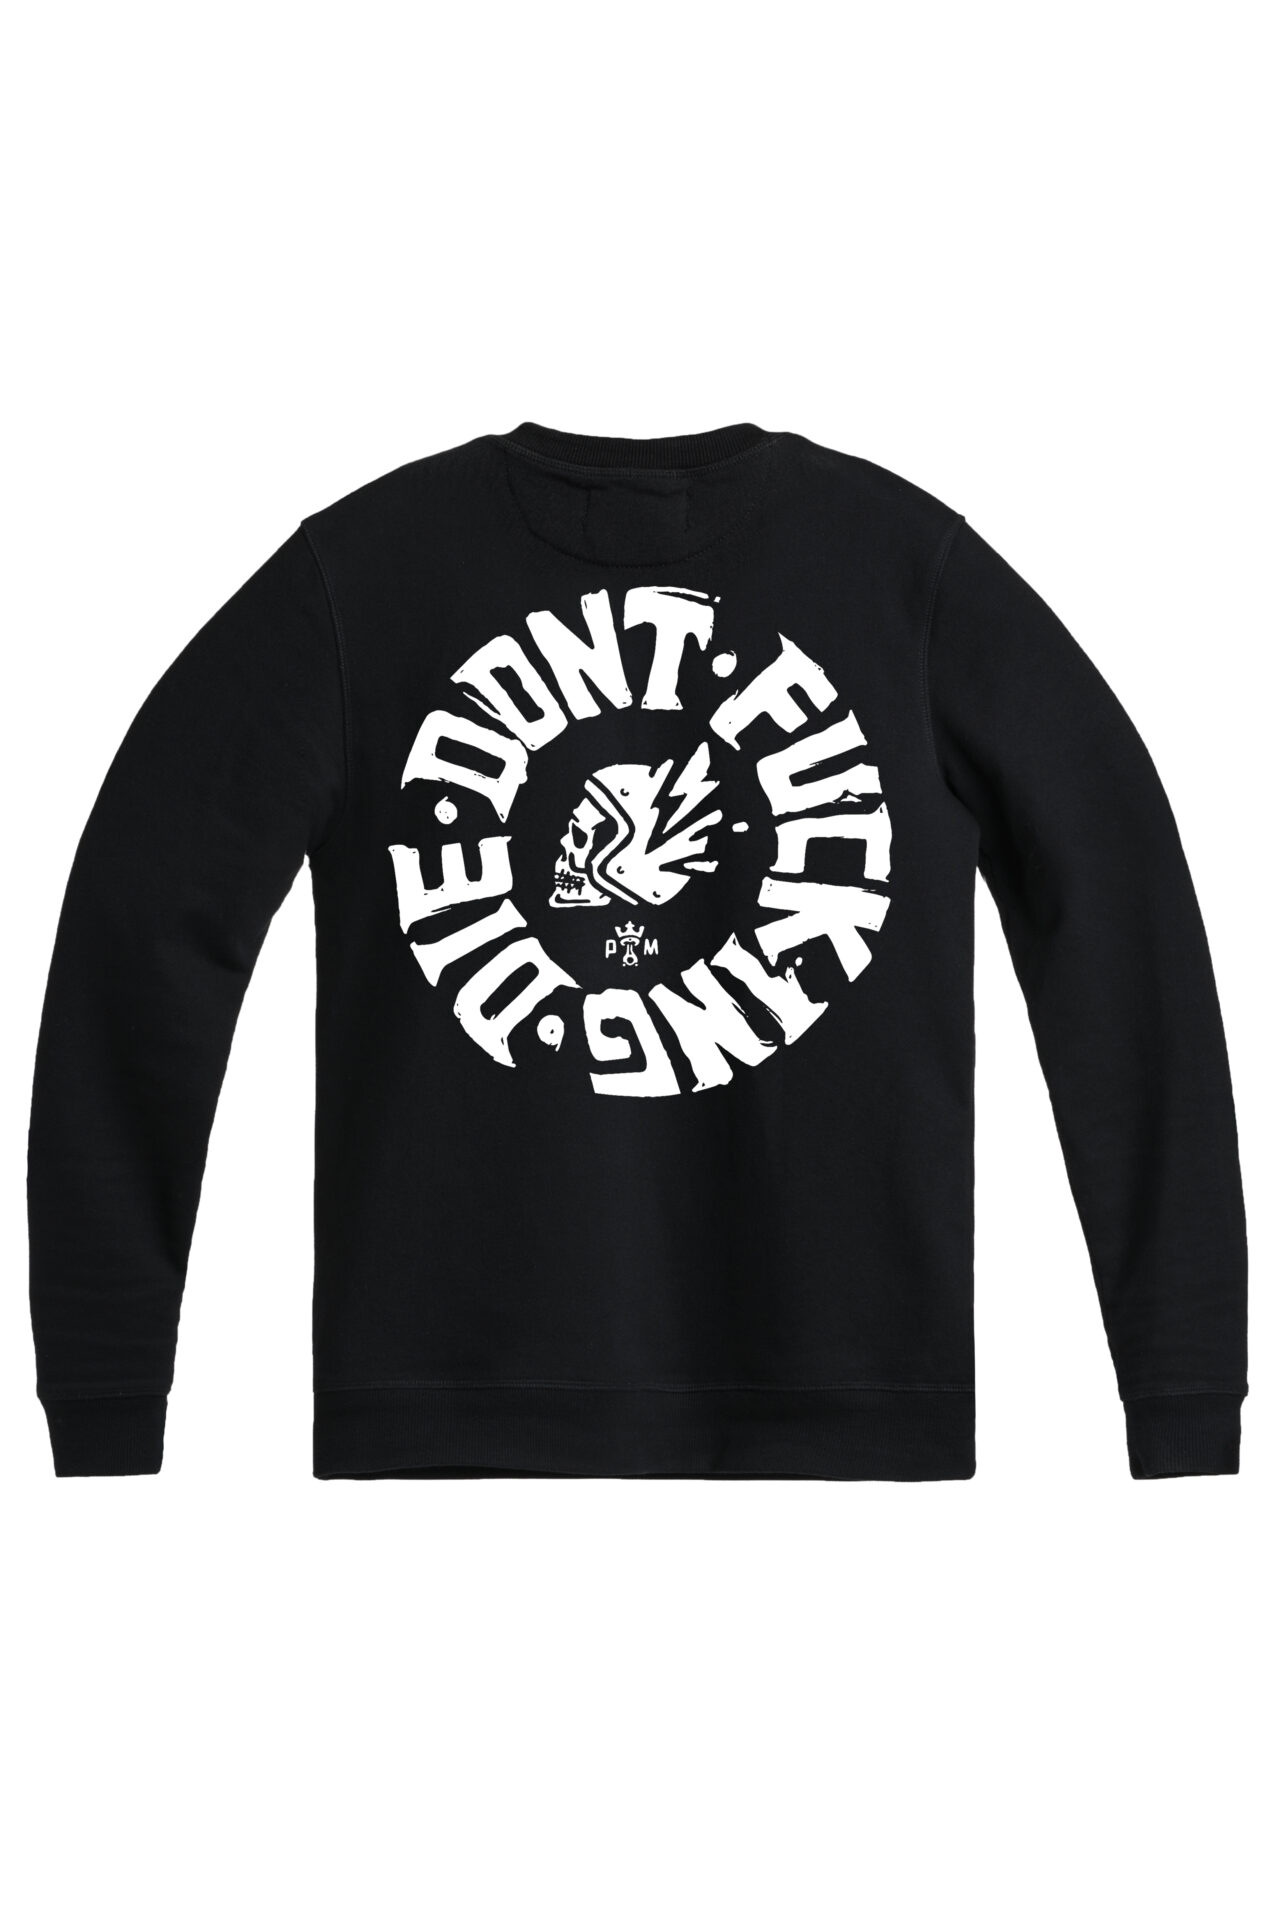 JOHN DON'T DIE - Biker-Sweatshirt, reguläre Passform, Limited Edition 3